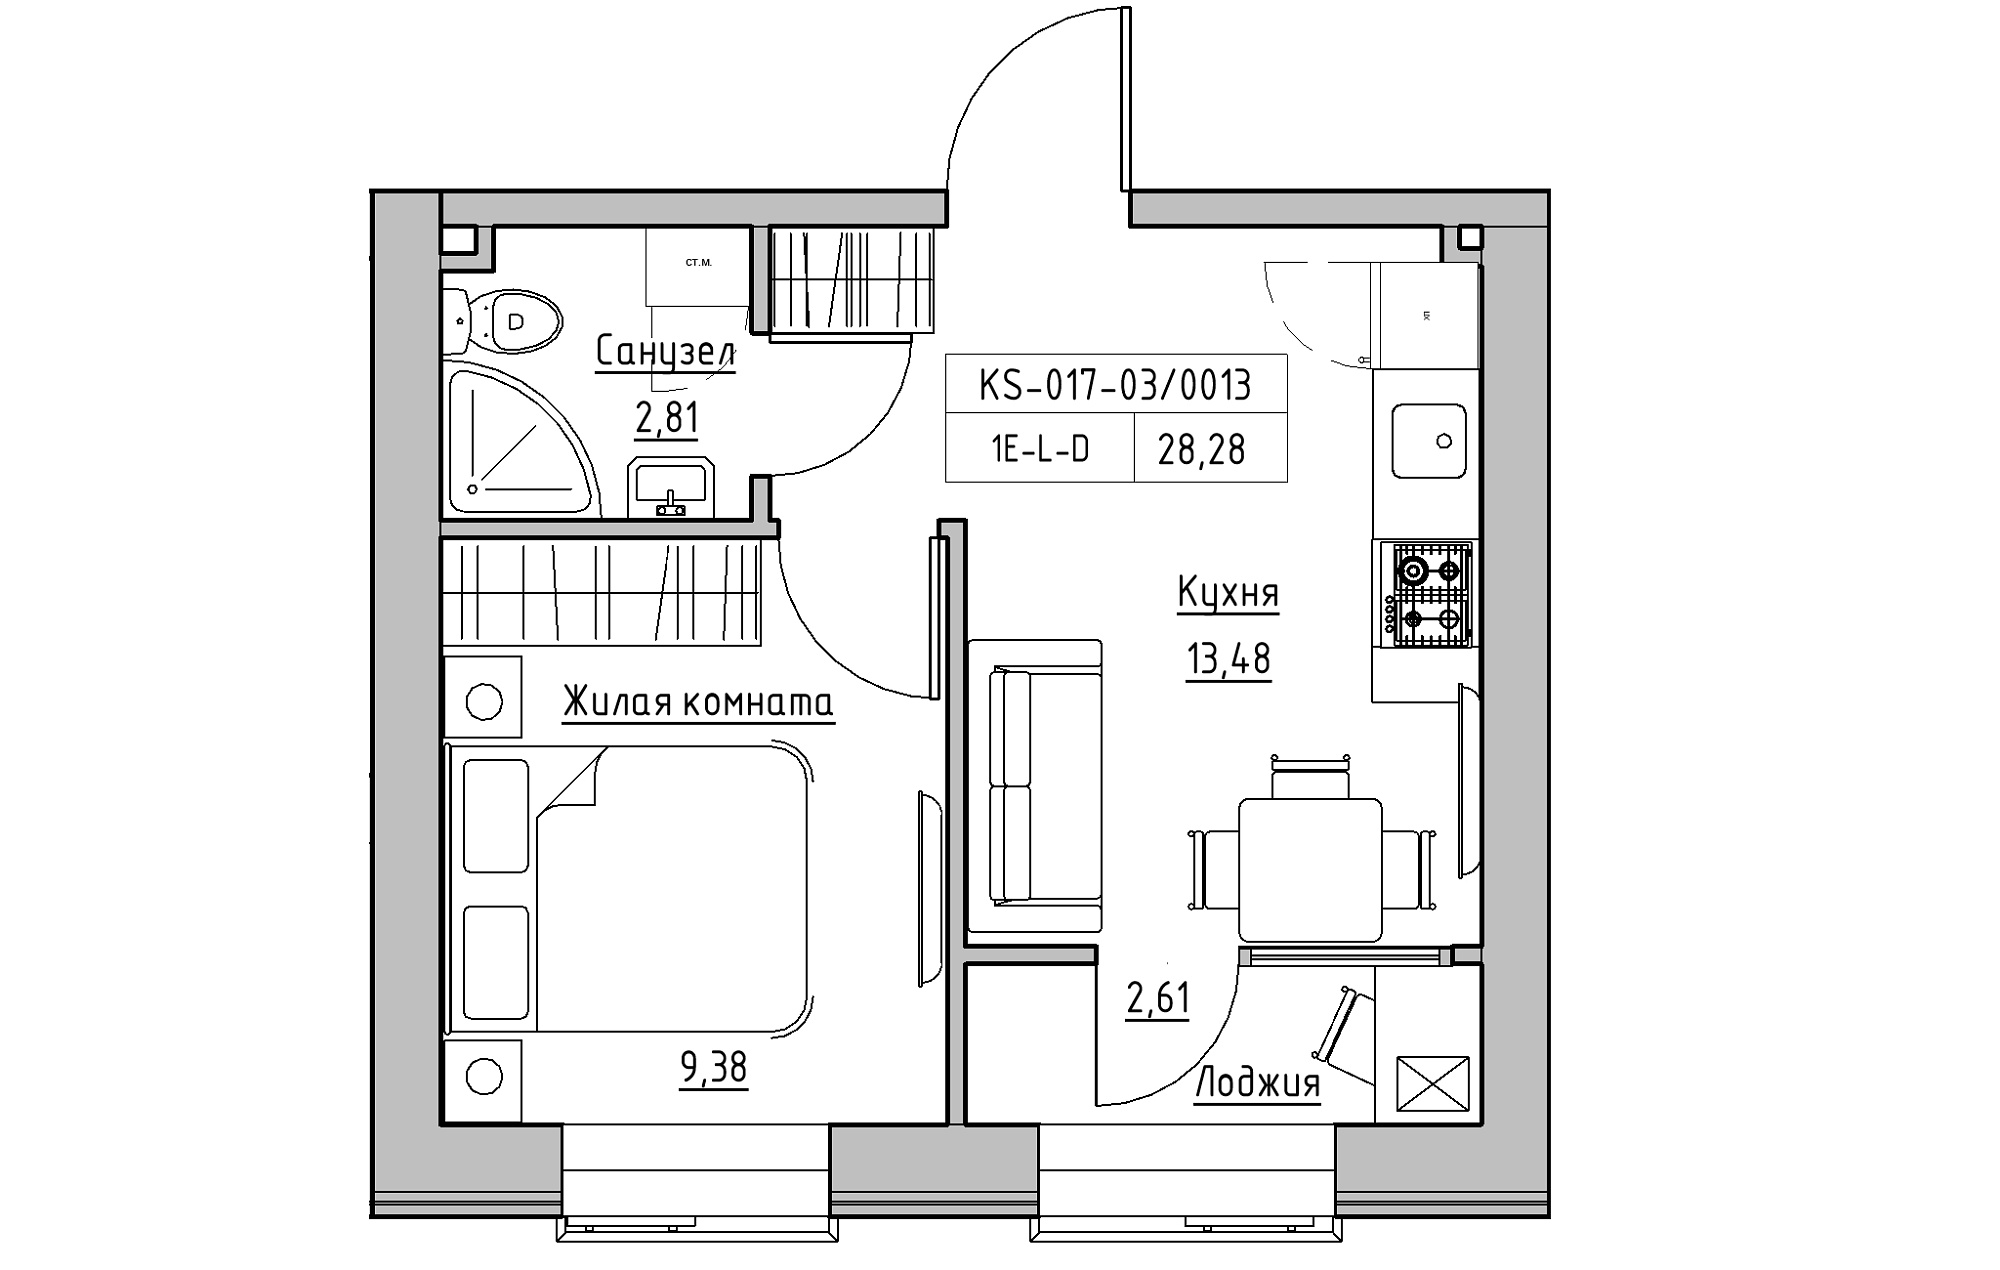 Planning 1-rm flats area 28.28m2, KS-017-03/0013.